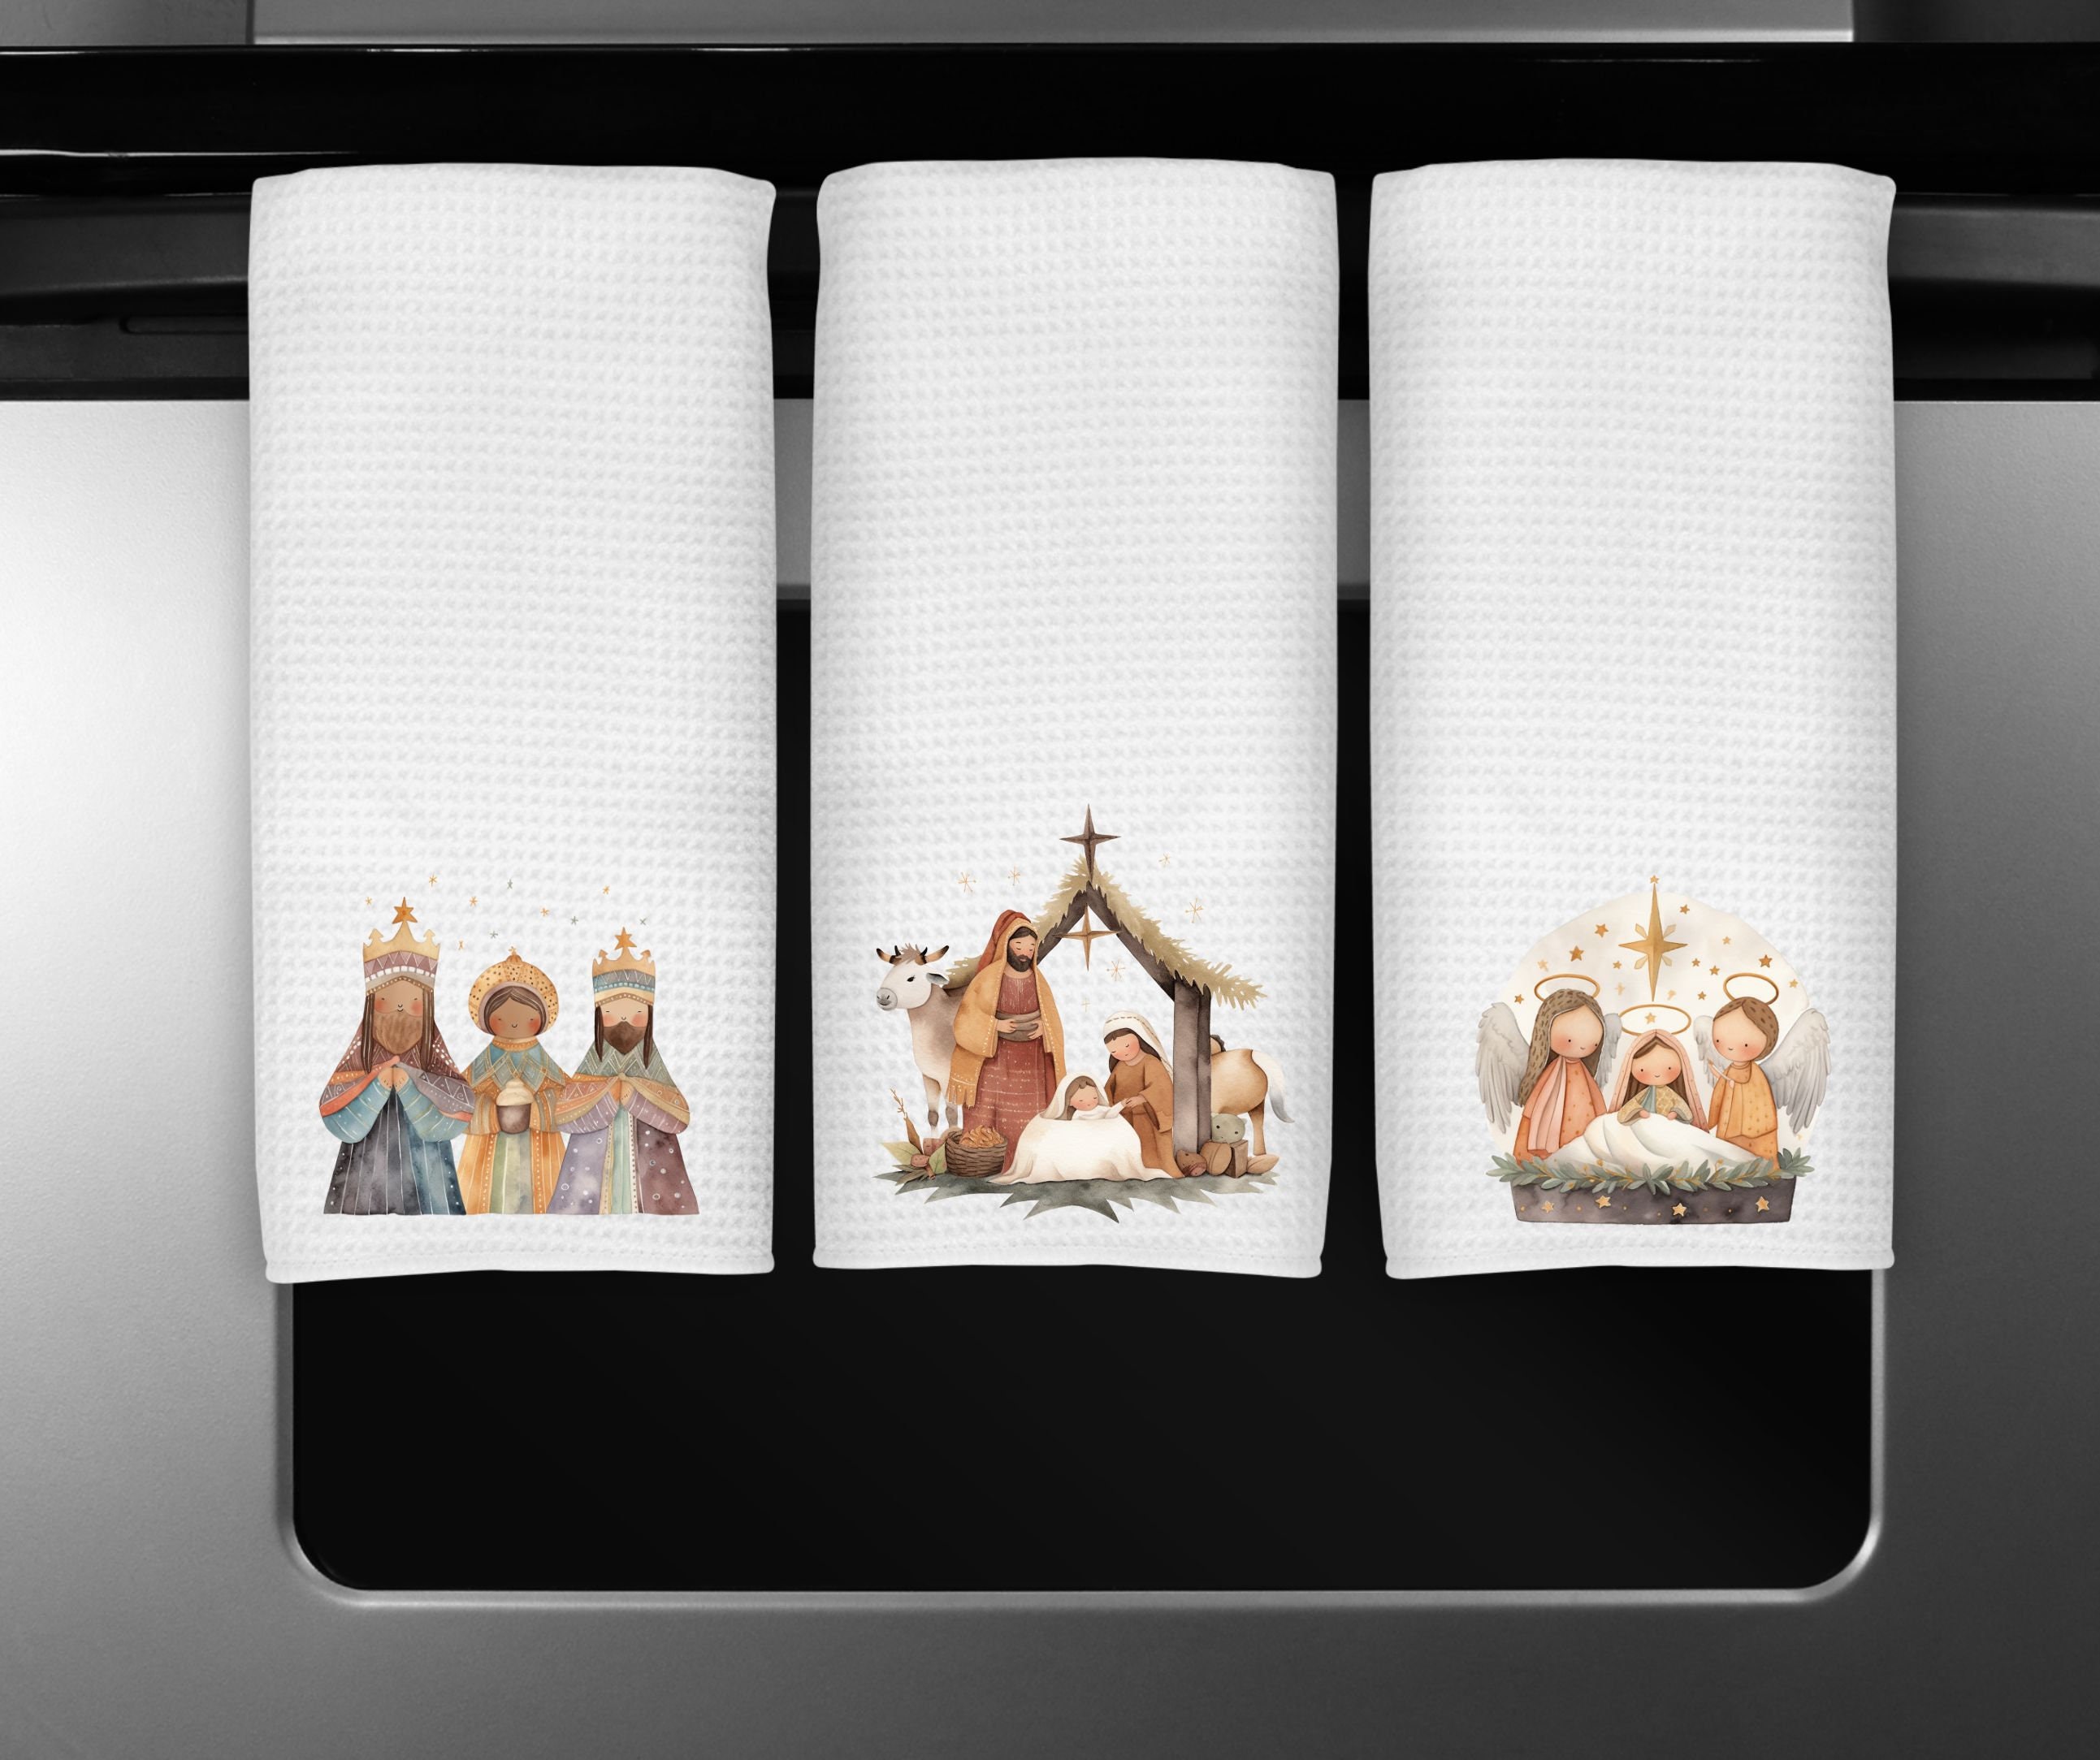 Winter Gondola Organic Cotton Dish Towels, Set of 2 + Reviews